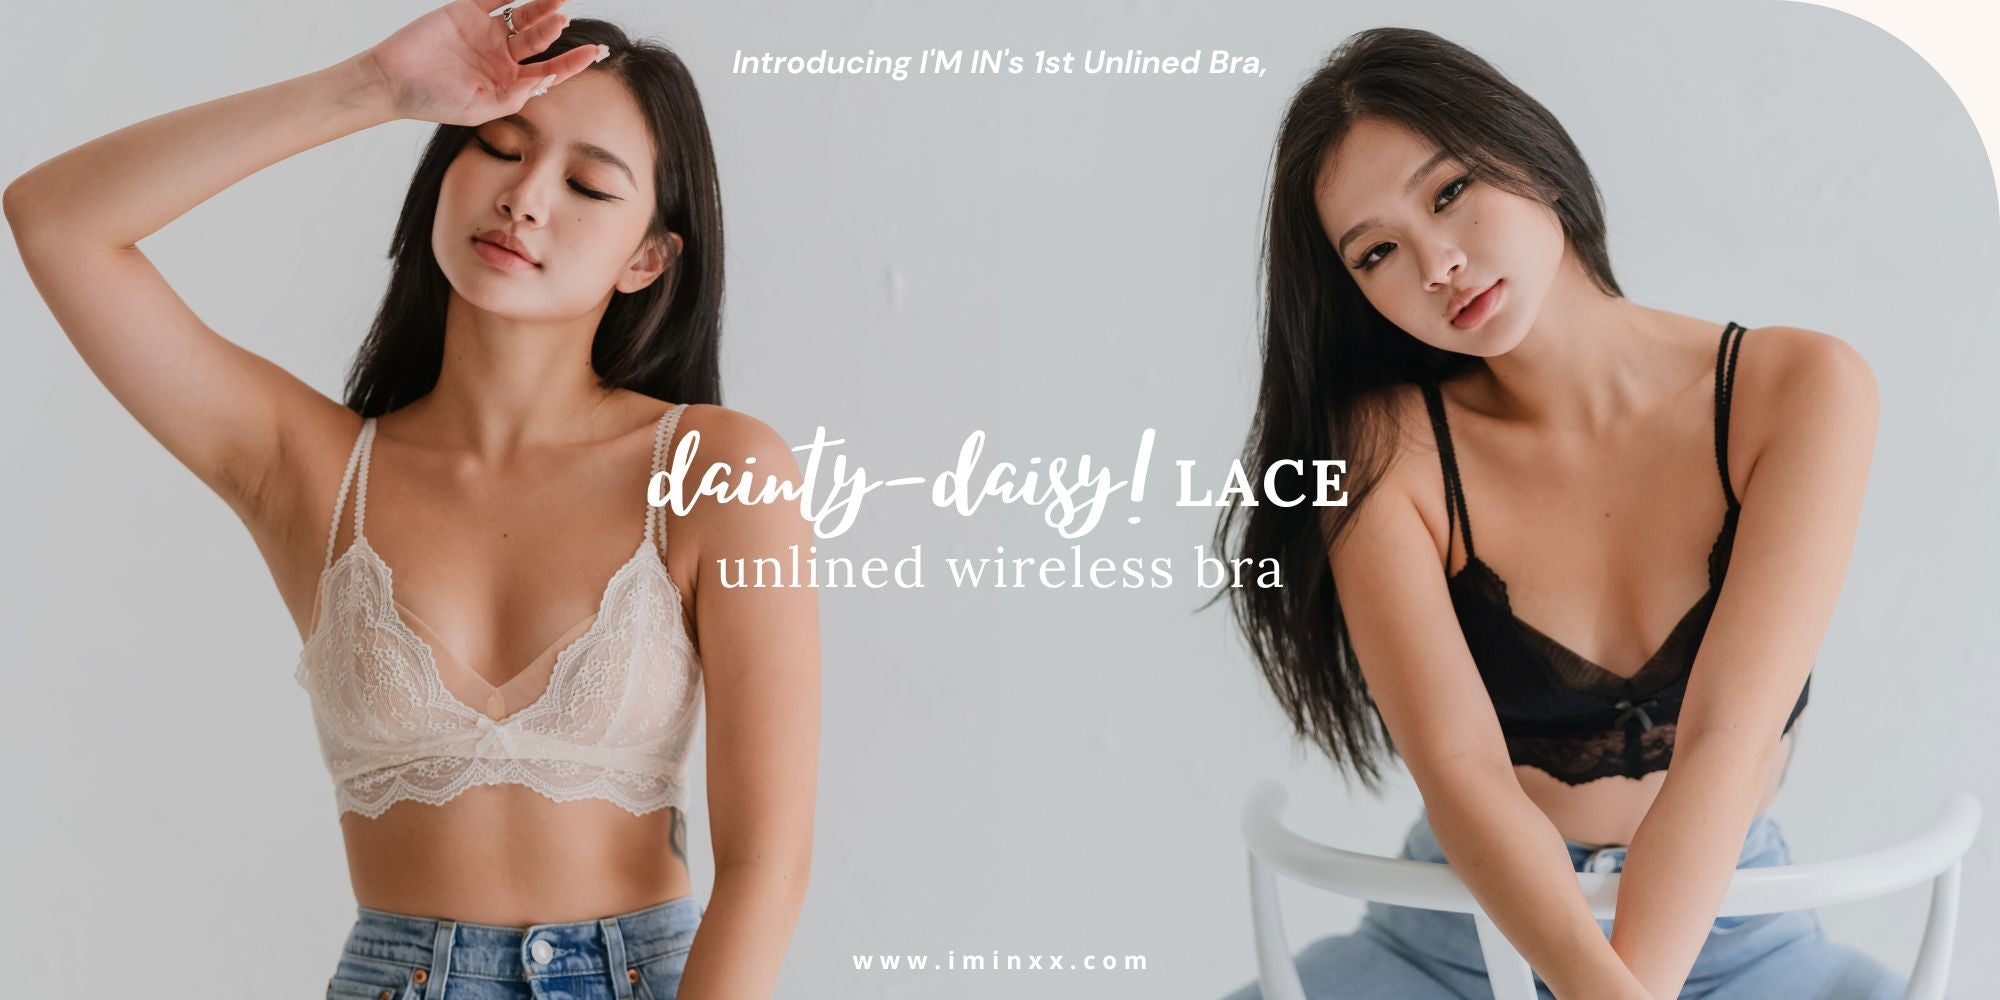 Dainty Daisy! Lace Unlined Wireless Bra Tagged 34D/75D